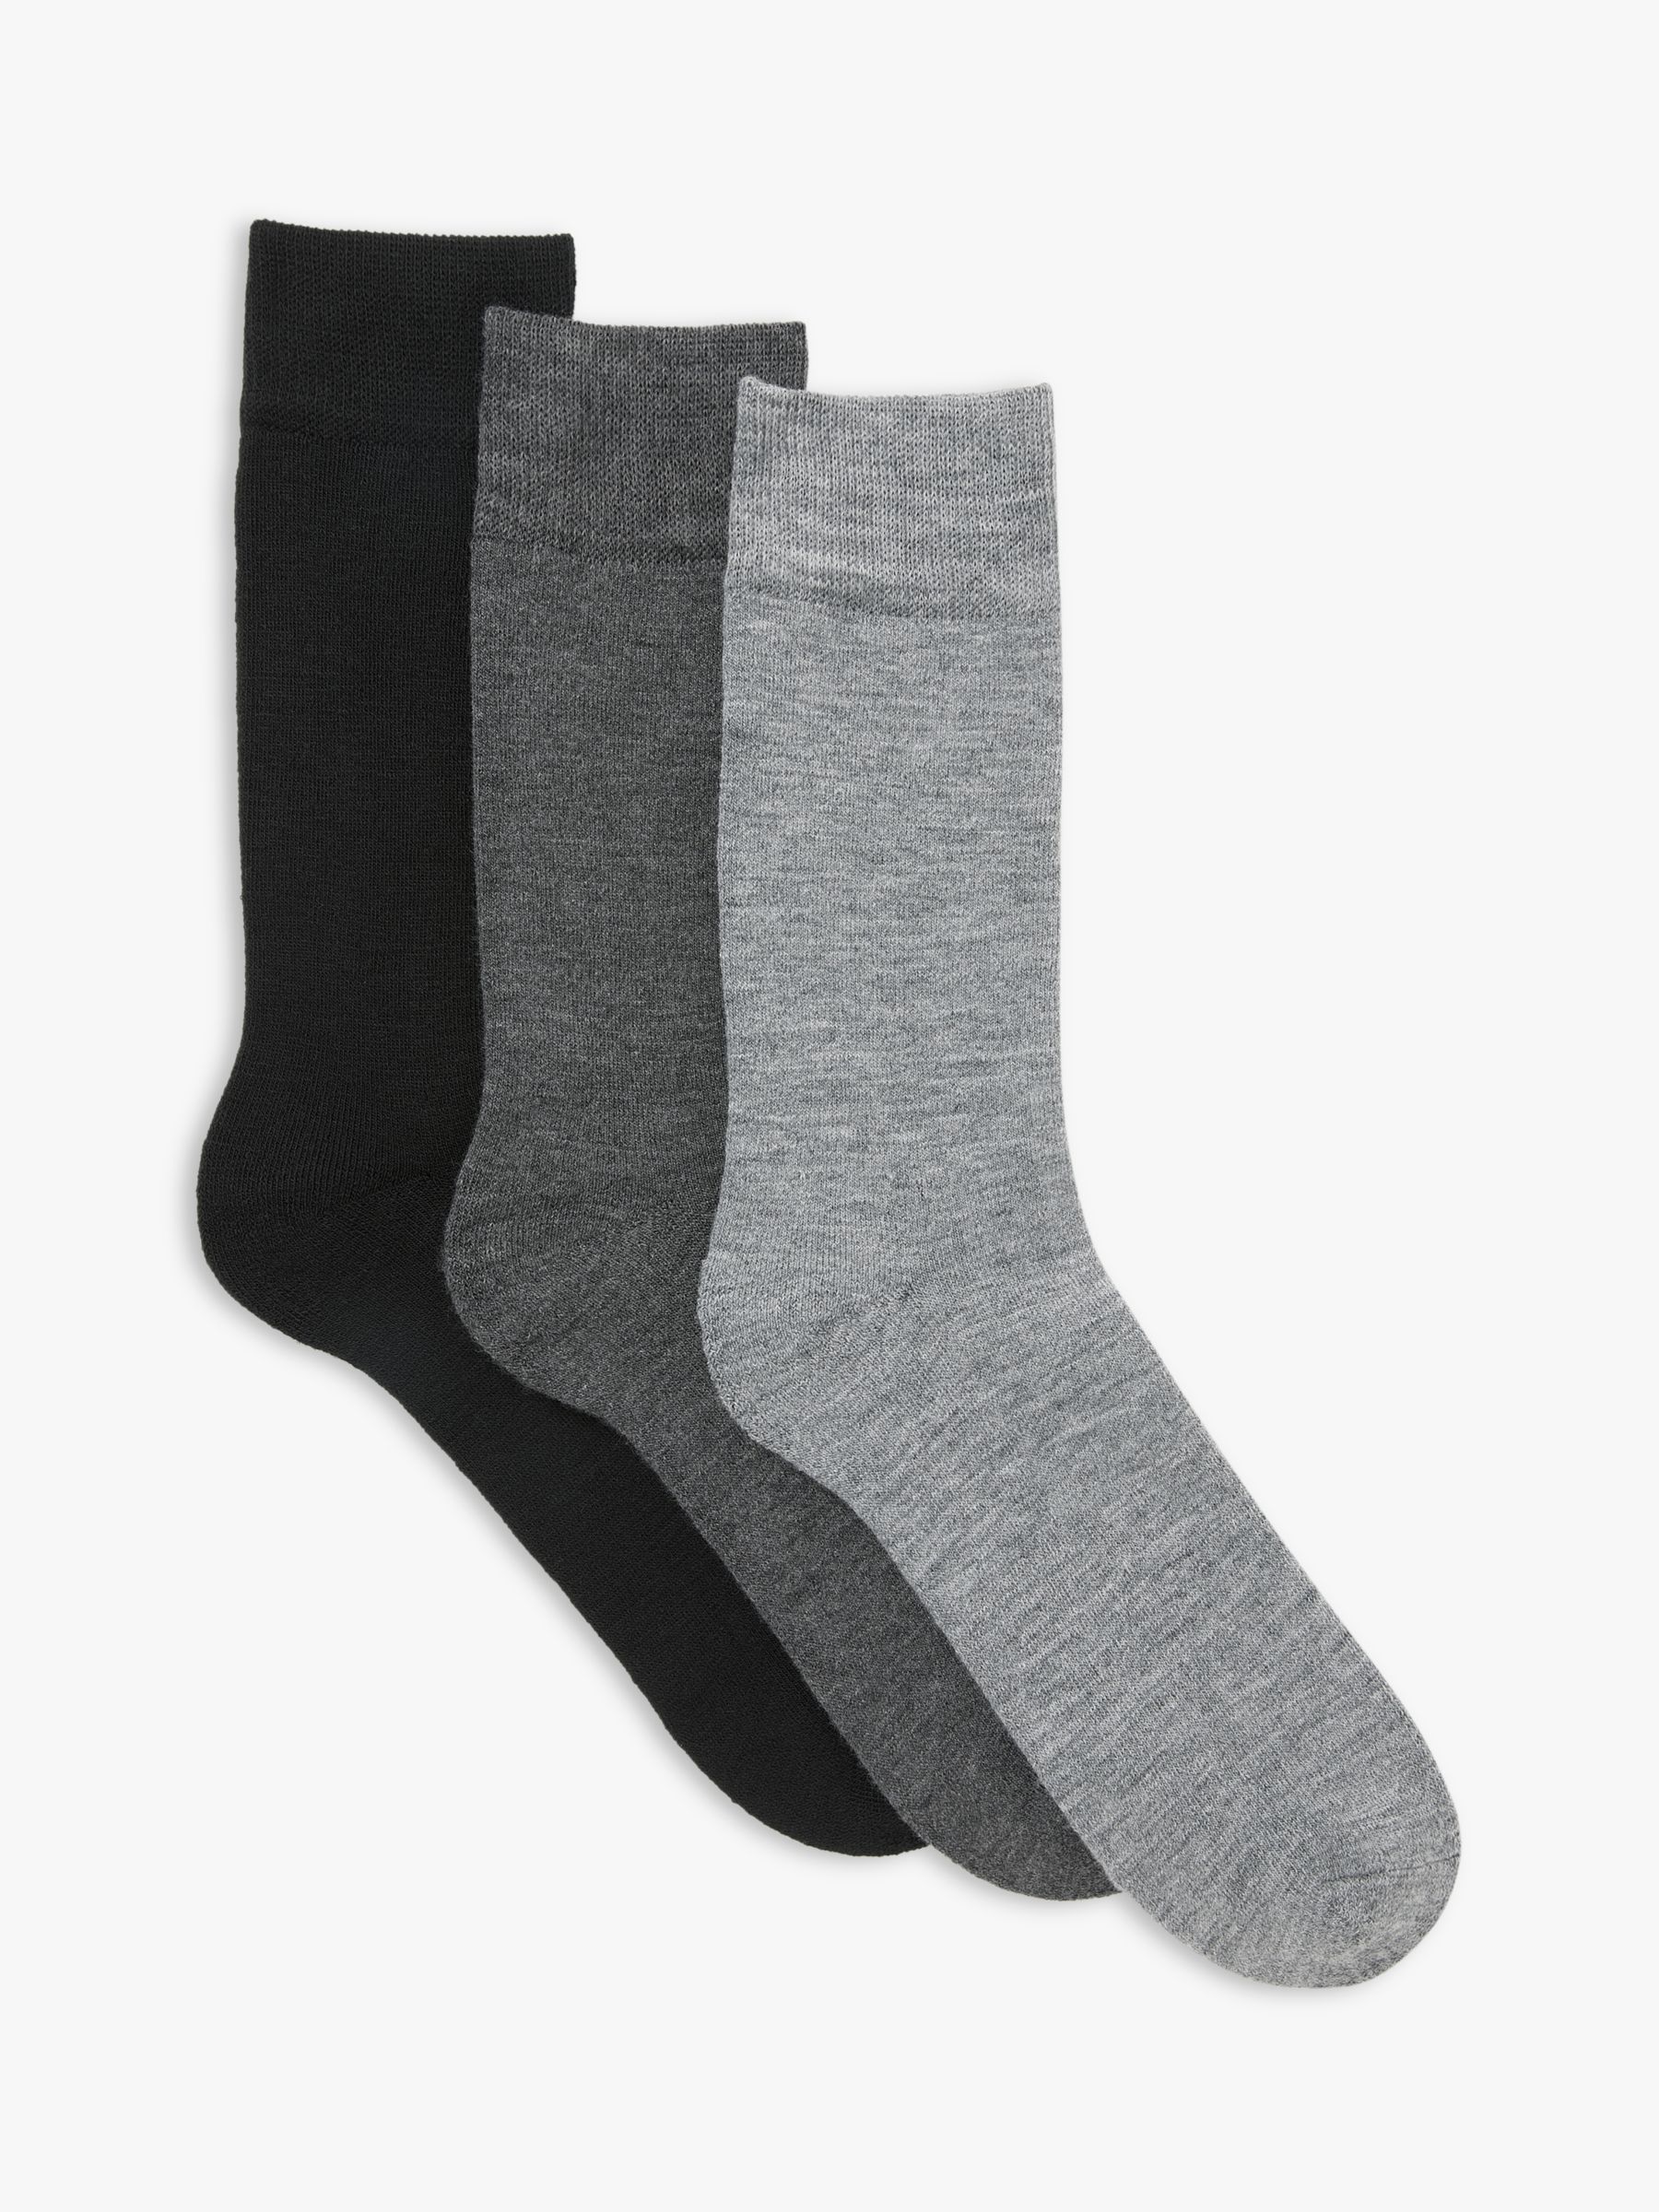 John Lewis Thermal Wool Blend Socks, Pack of 3, One Size, Black ...